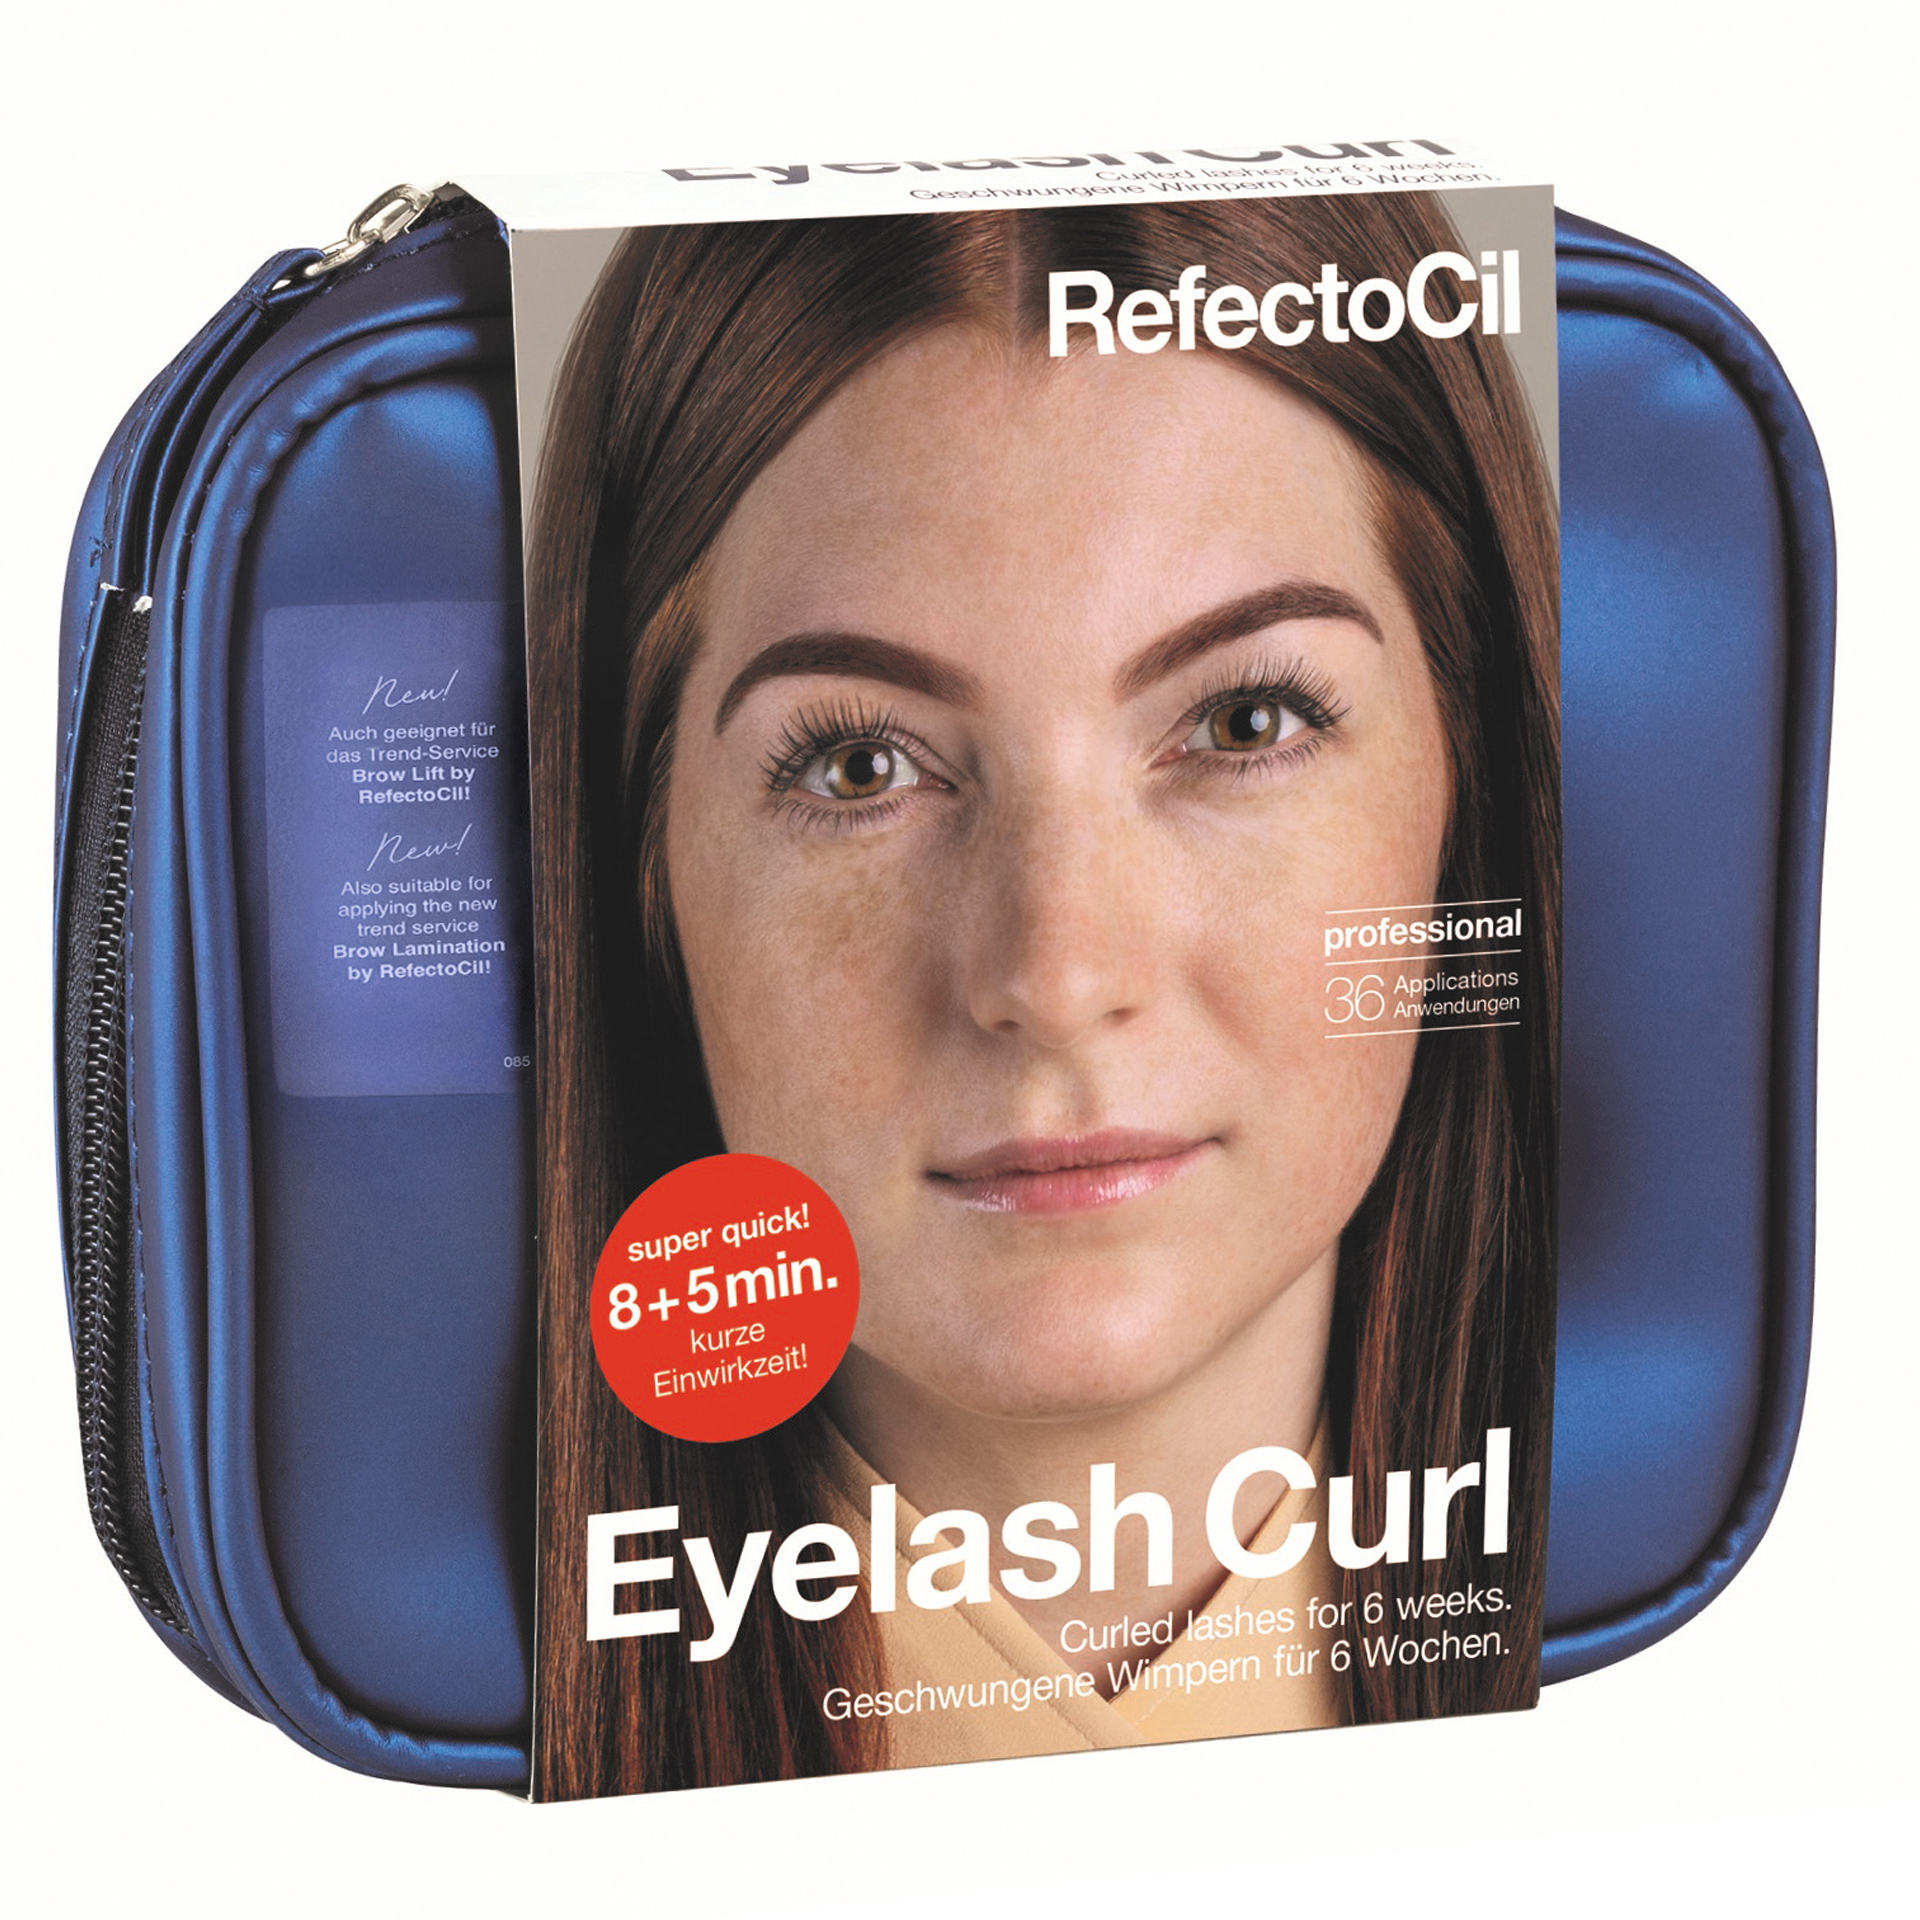 RefectoCil® "Eyelash Curl" Kit